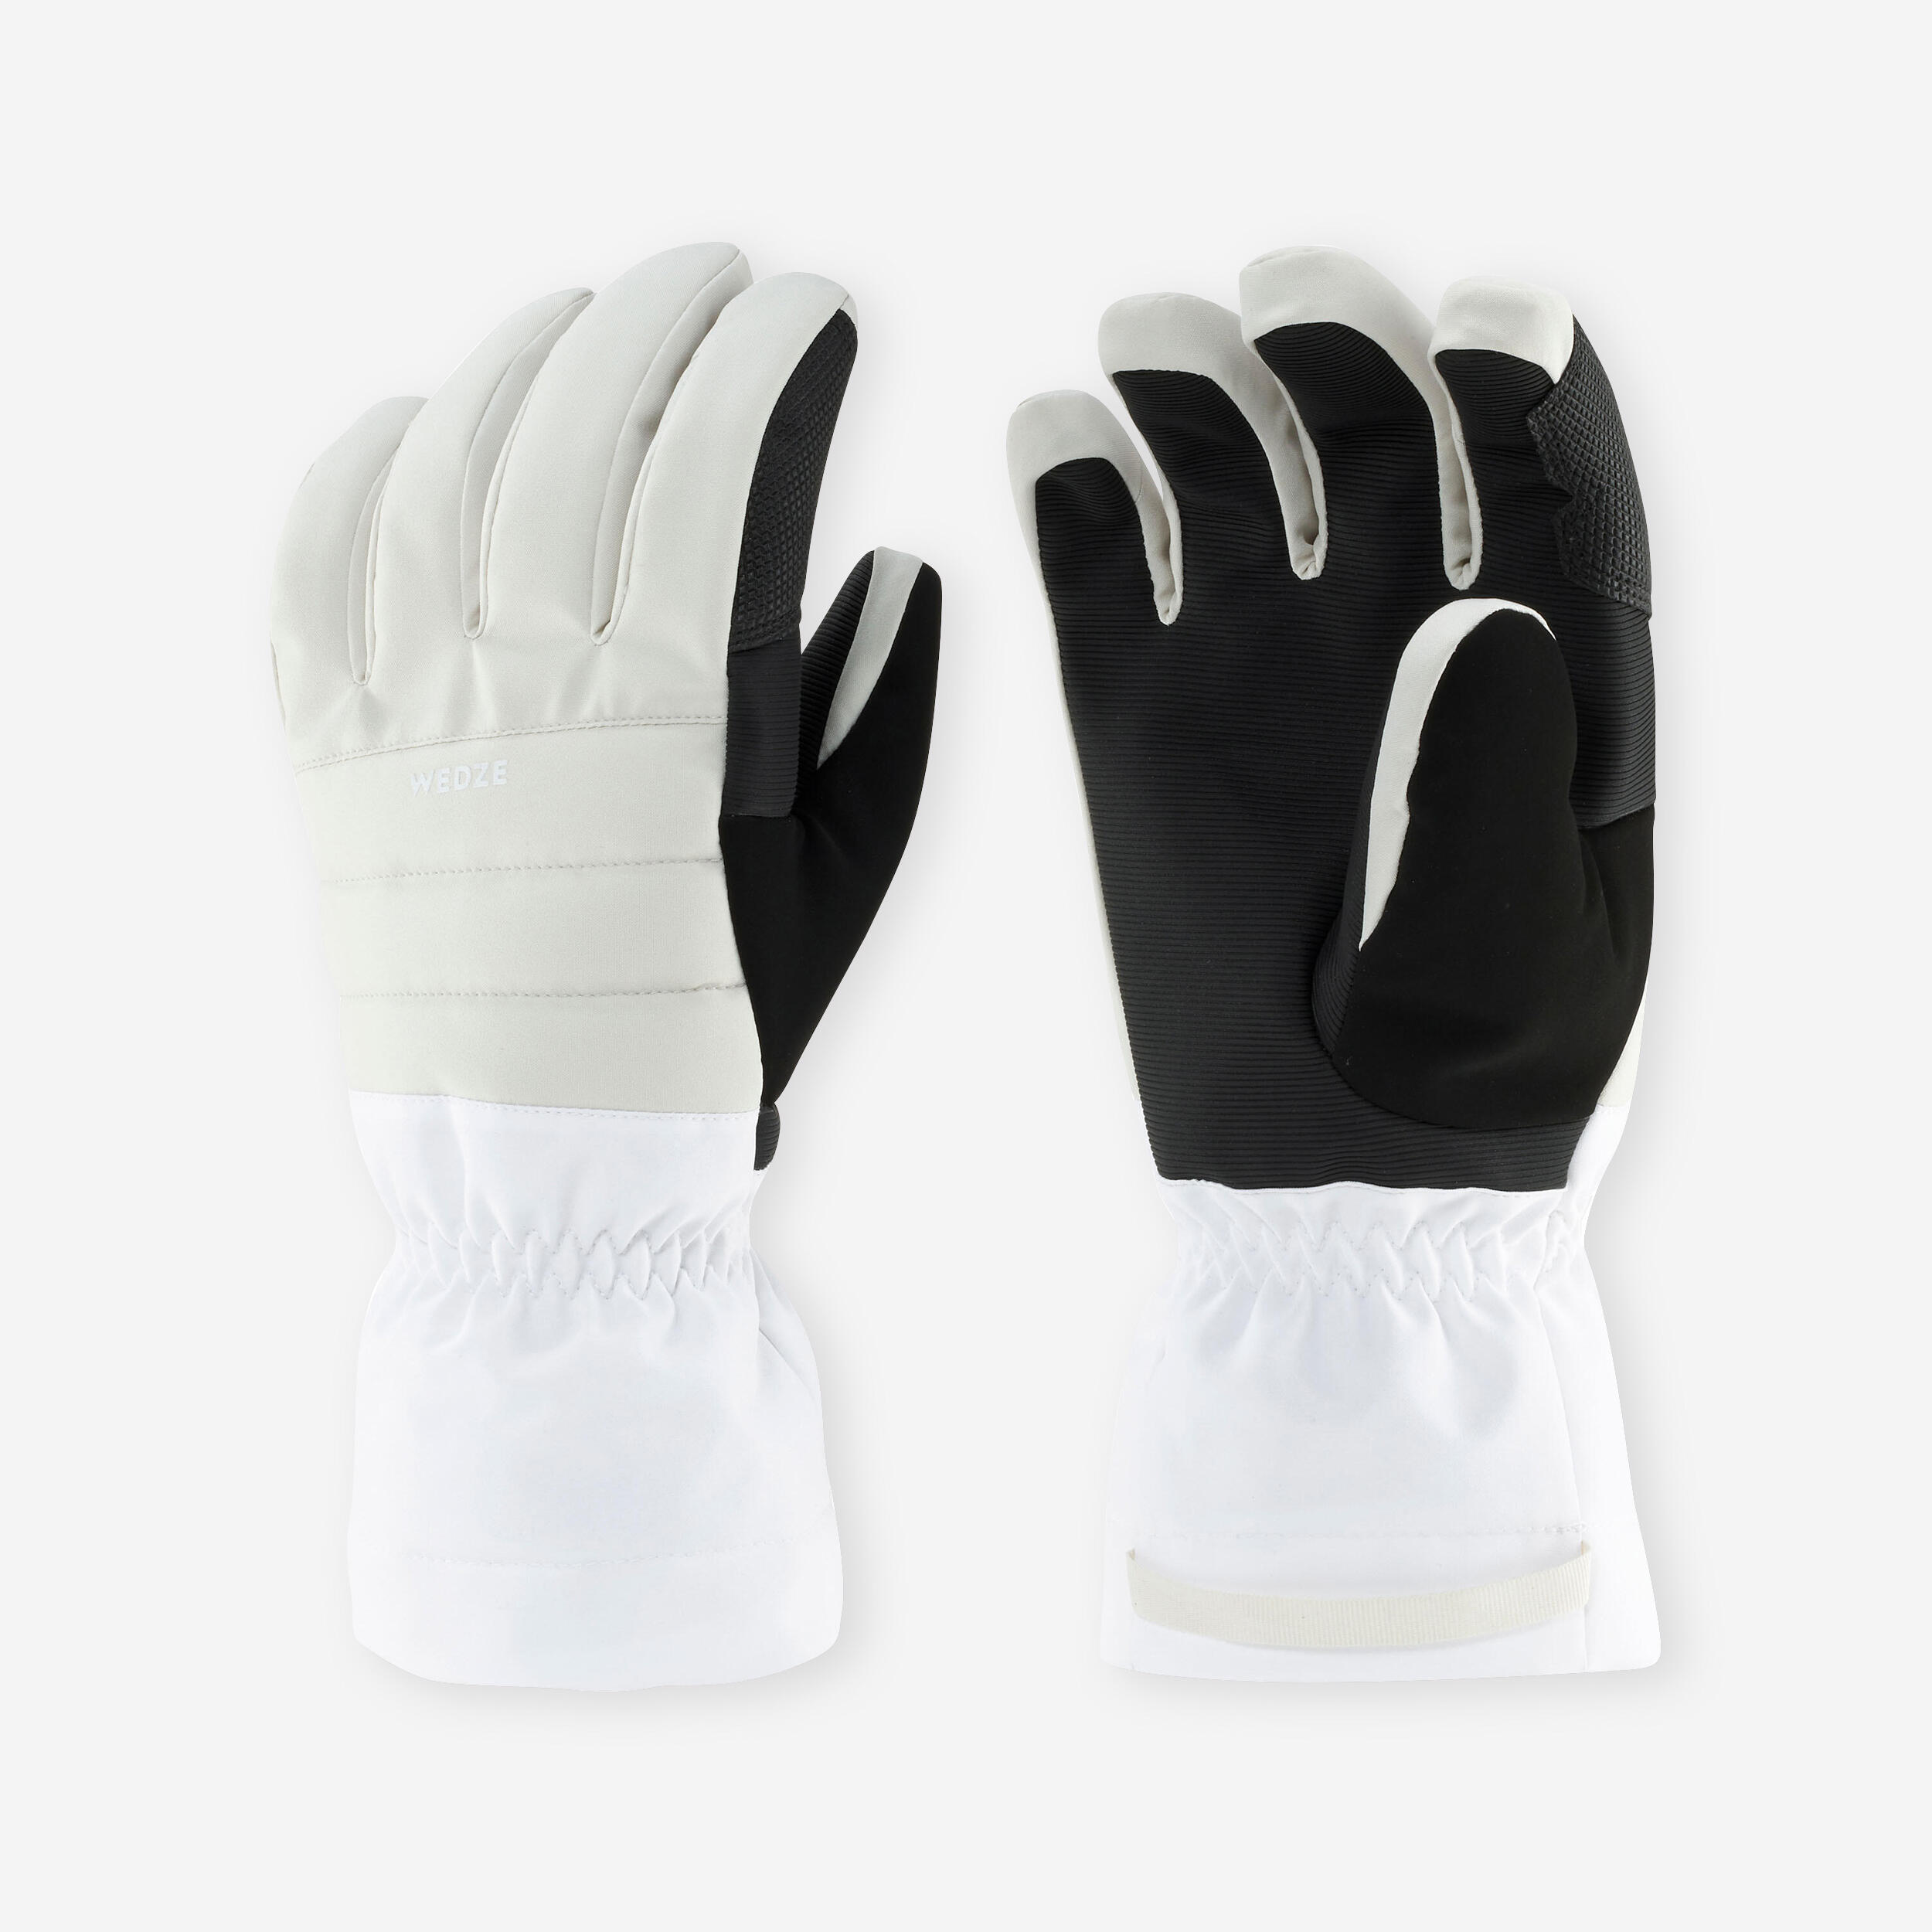 Image of Warm Waterproof Ski Gloves - Ski 500 White